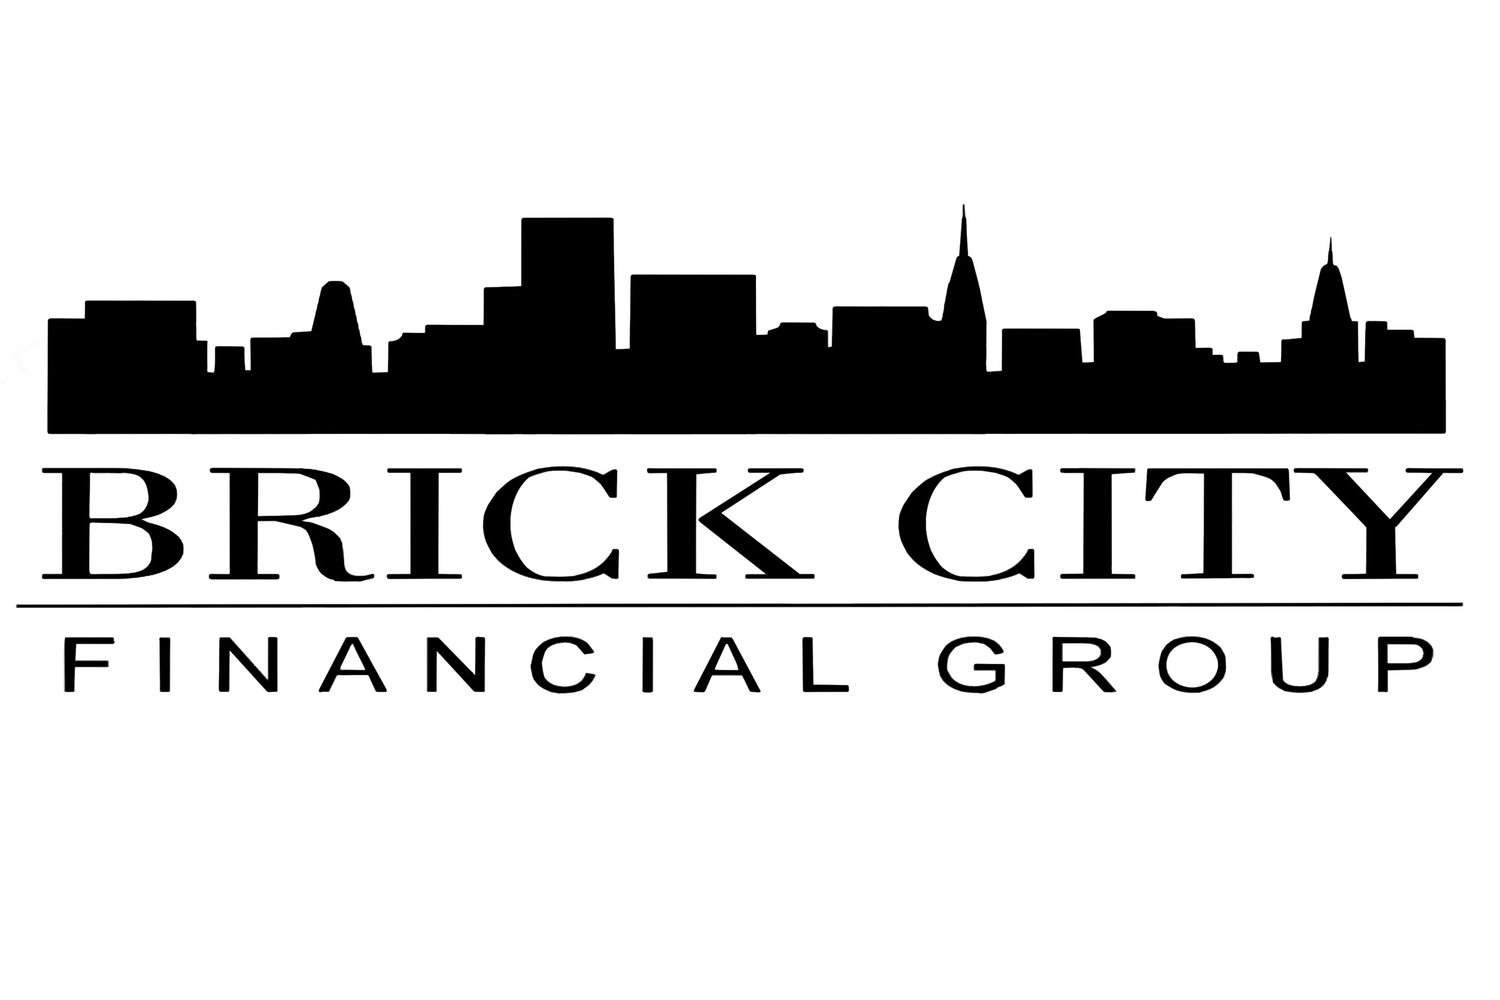 BRICK CITY FINANCIAL GROUP